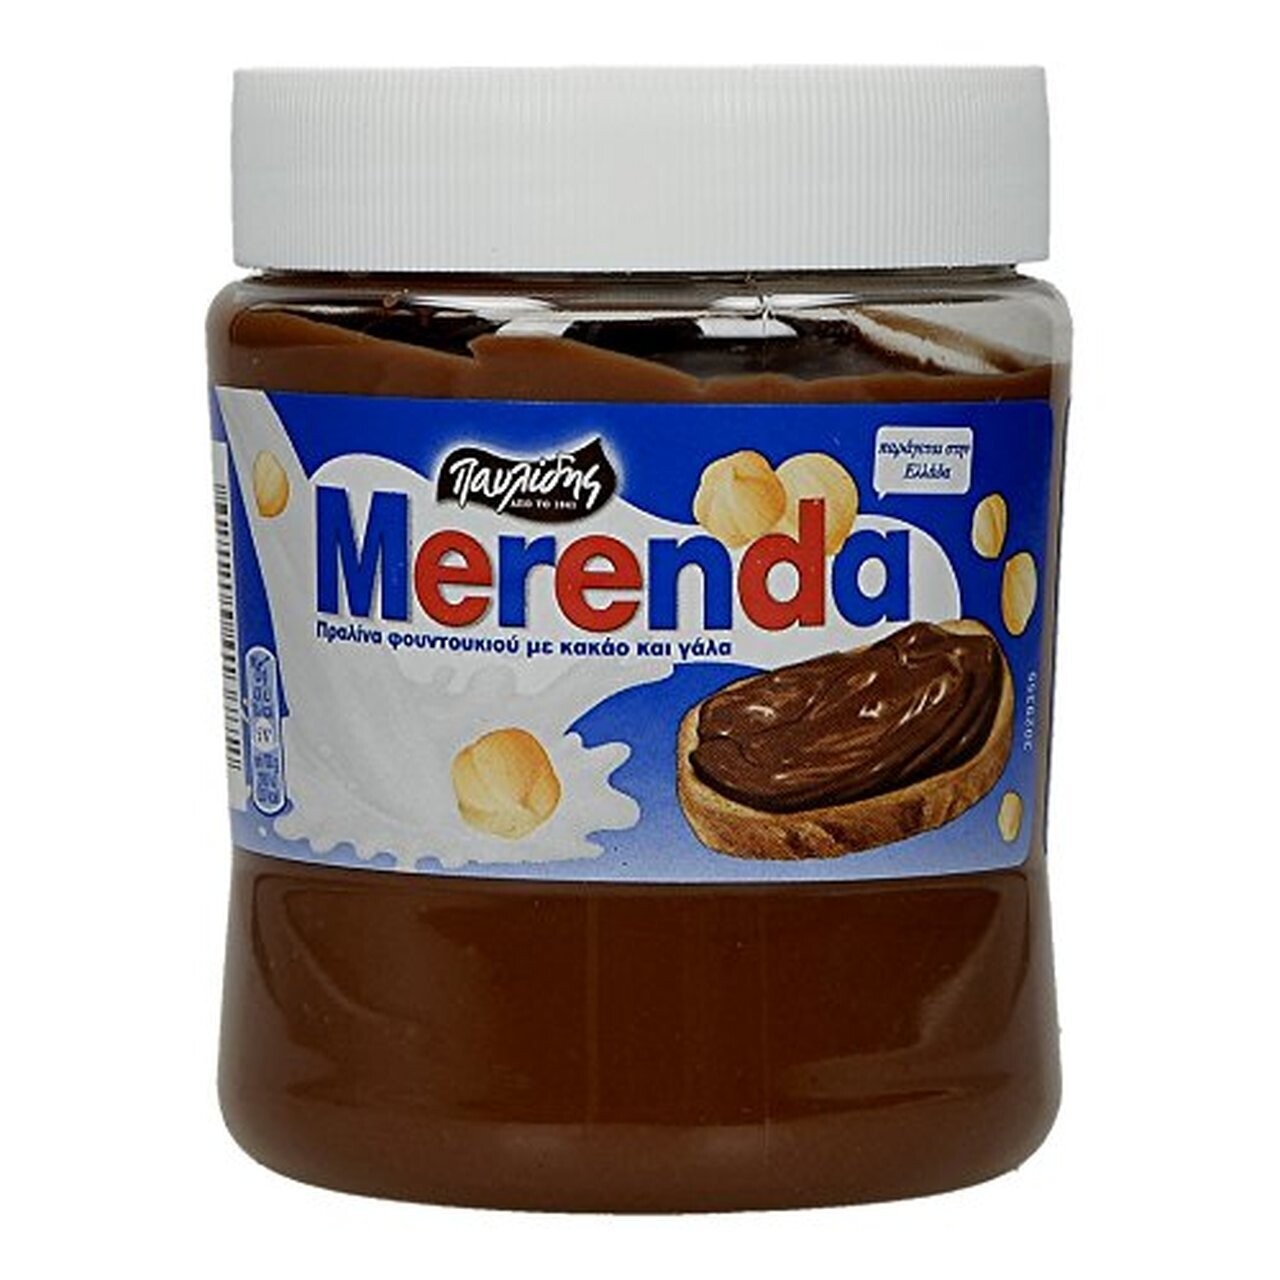 Merenda Chocolate Hazelnut Cream Spread 12.7 oz (360g)